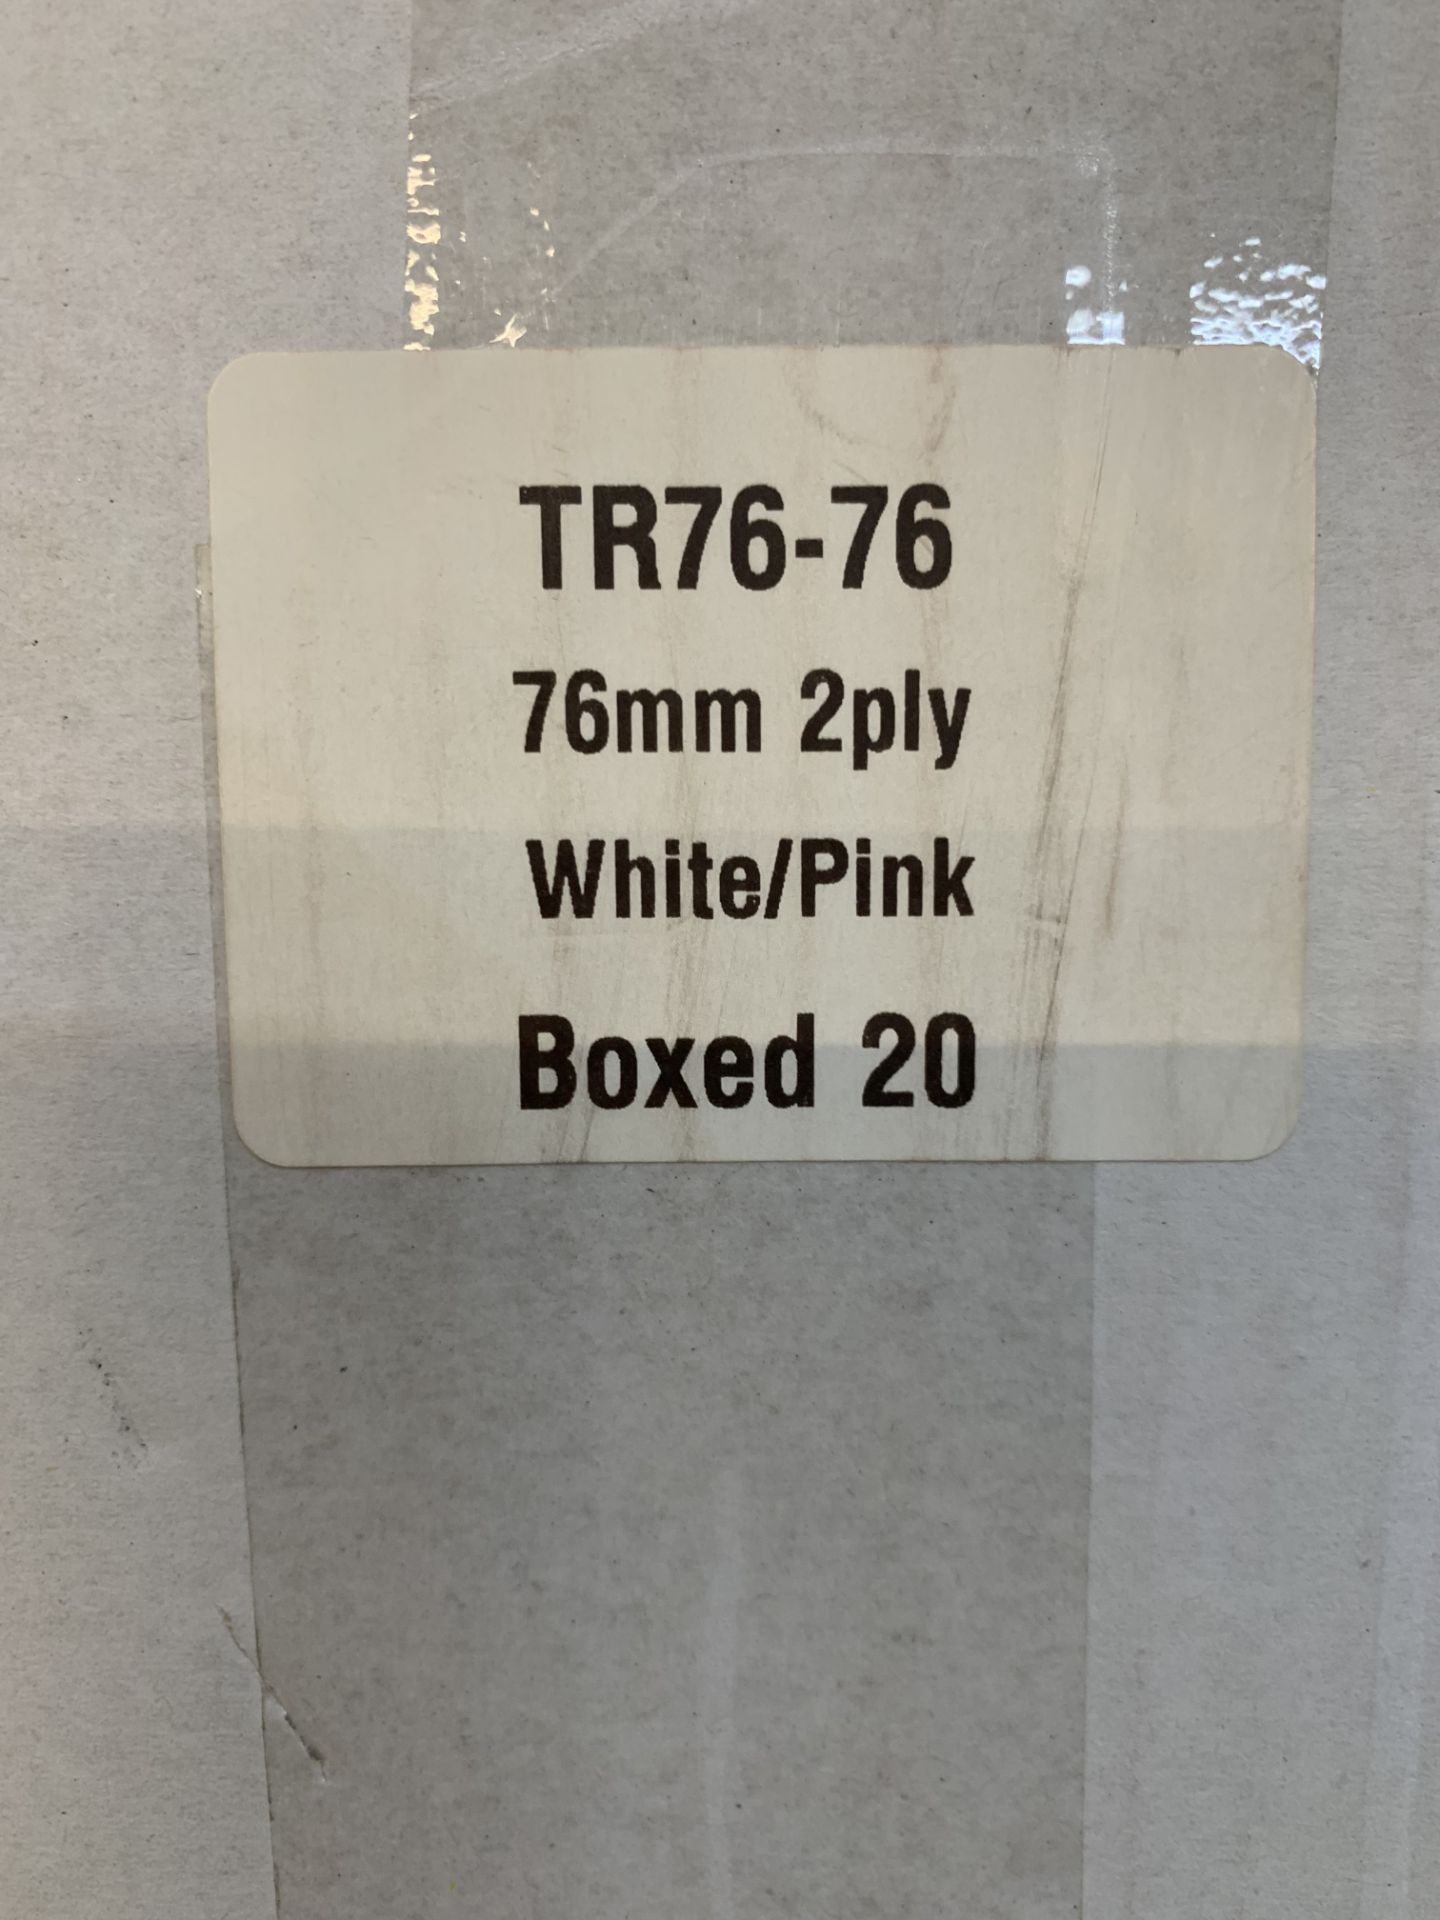 140 x Rolls Of White/Pink Receipt Rolls - Image 3 of 3